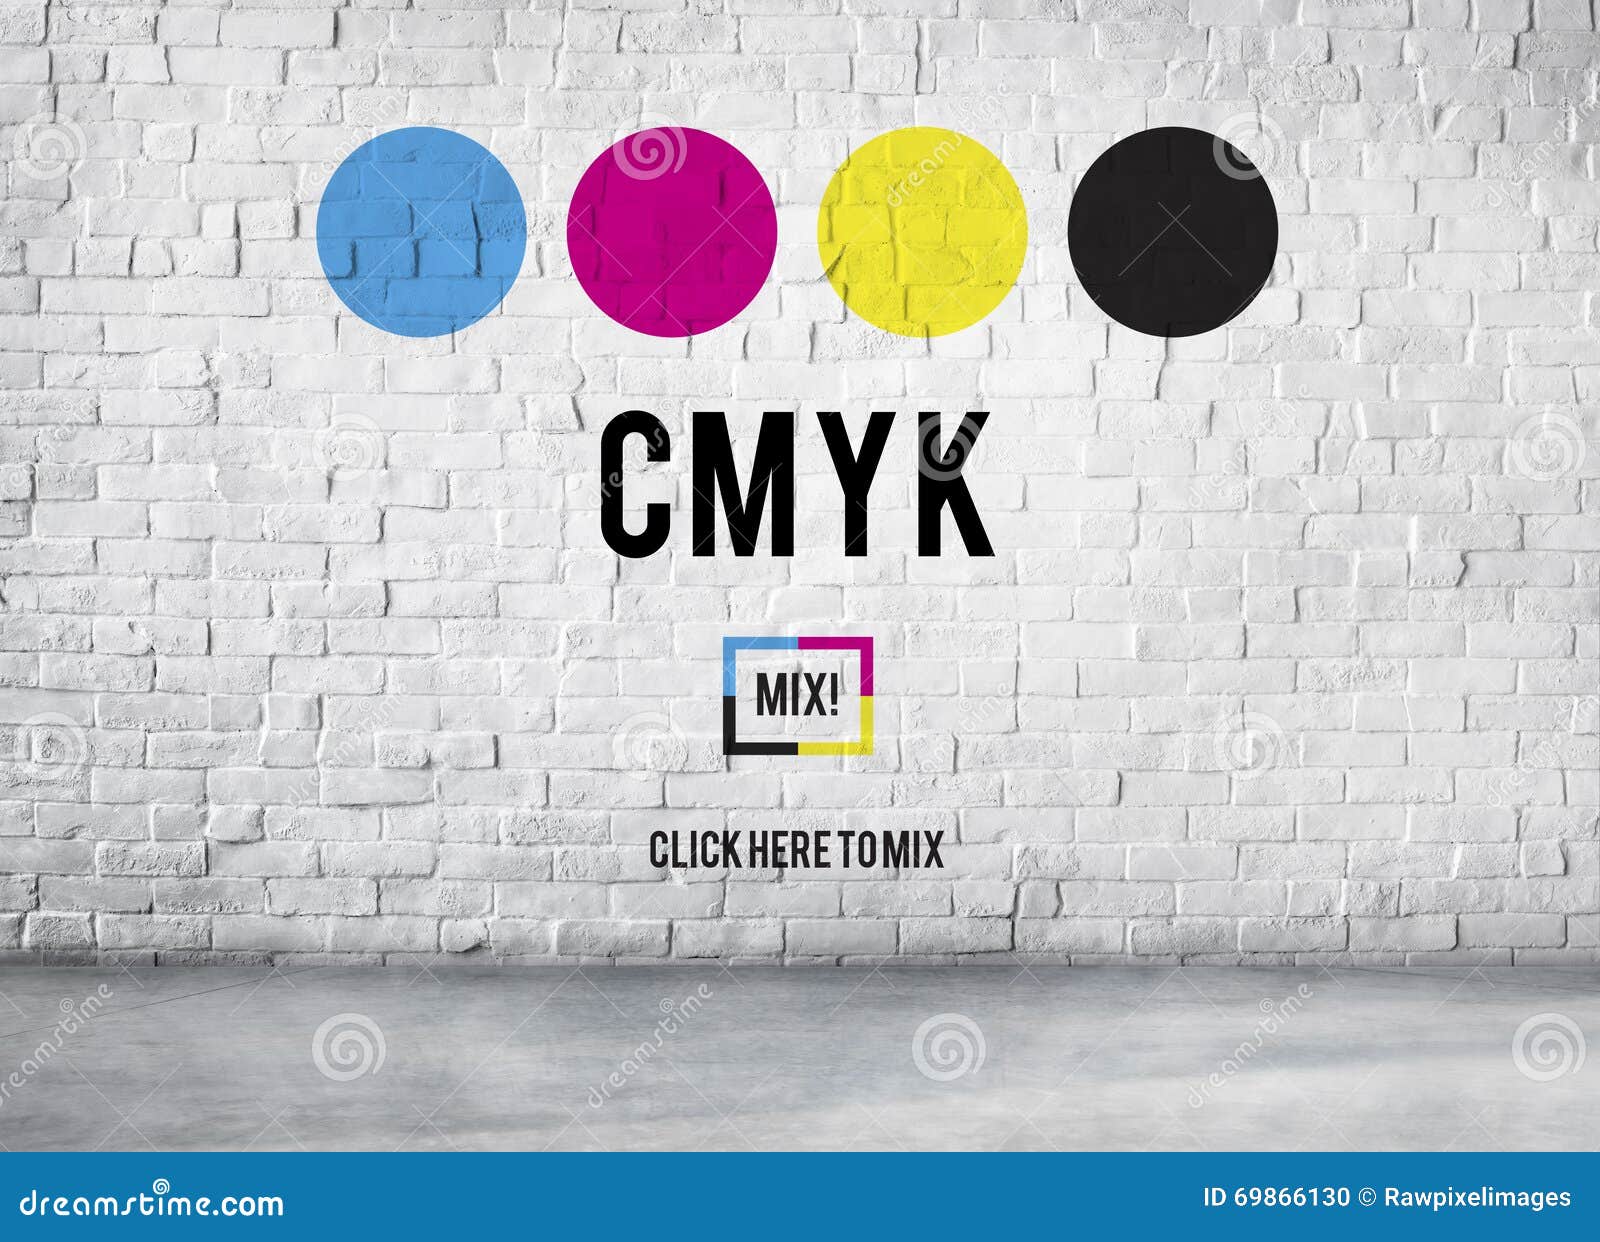 cmyk cyan magenta yellow key color printing process concept